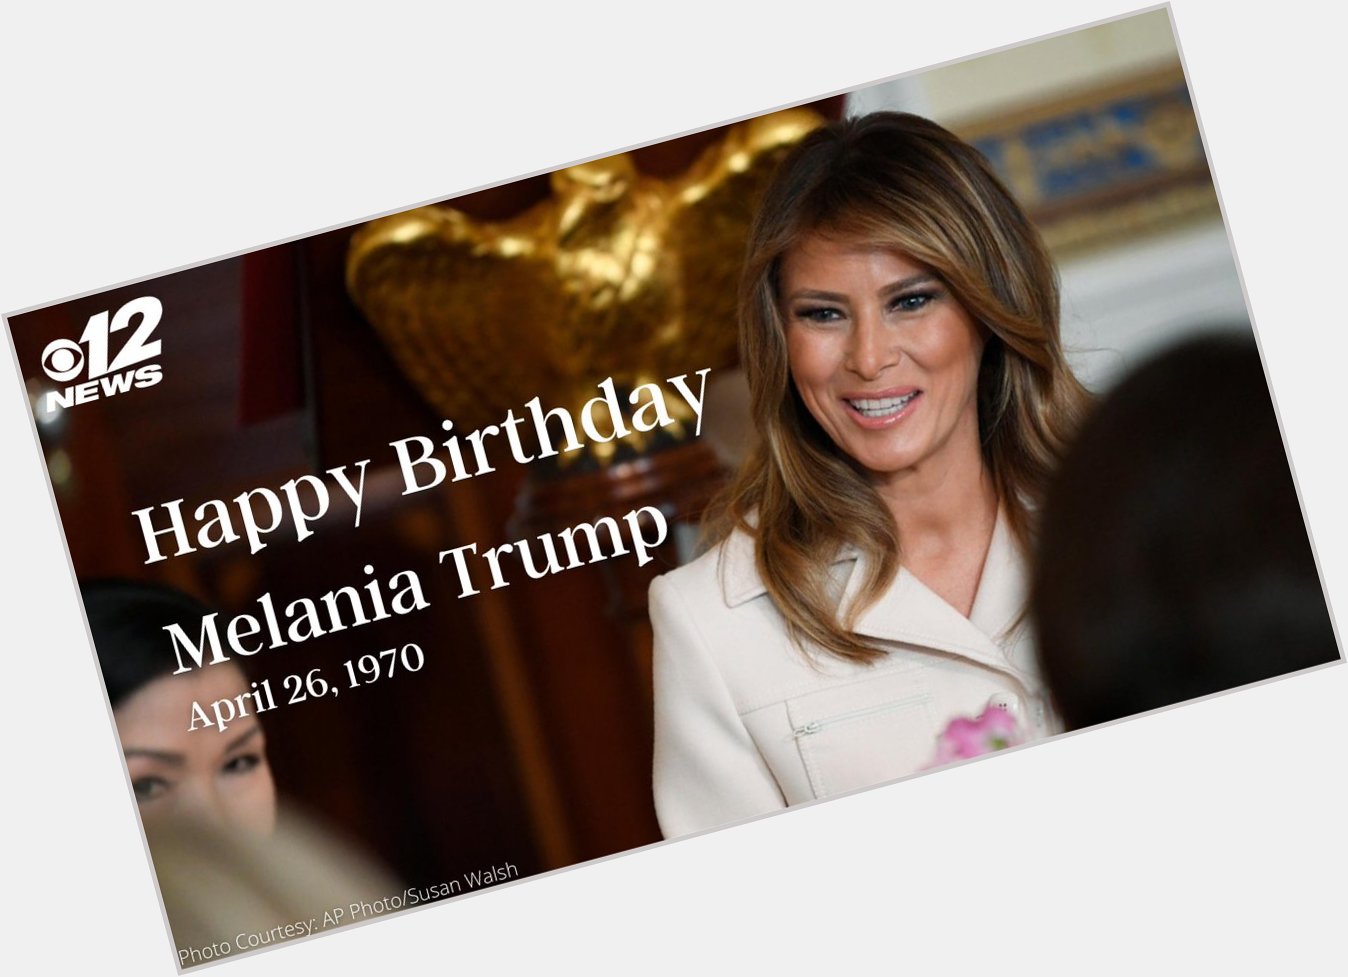 BIRTHDAY WISHES: Happy Birthday to former First lady Melania Trump.
 